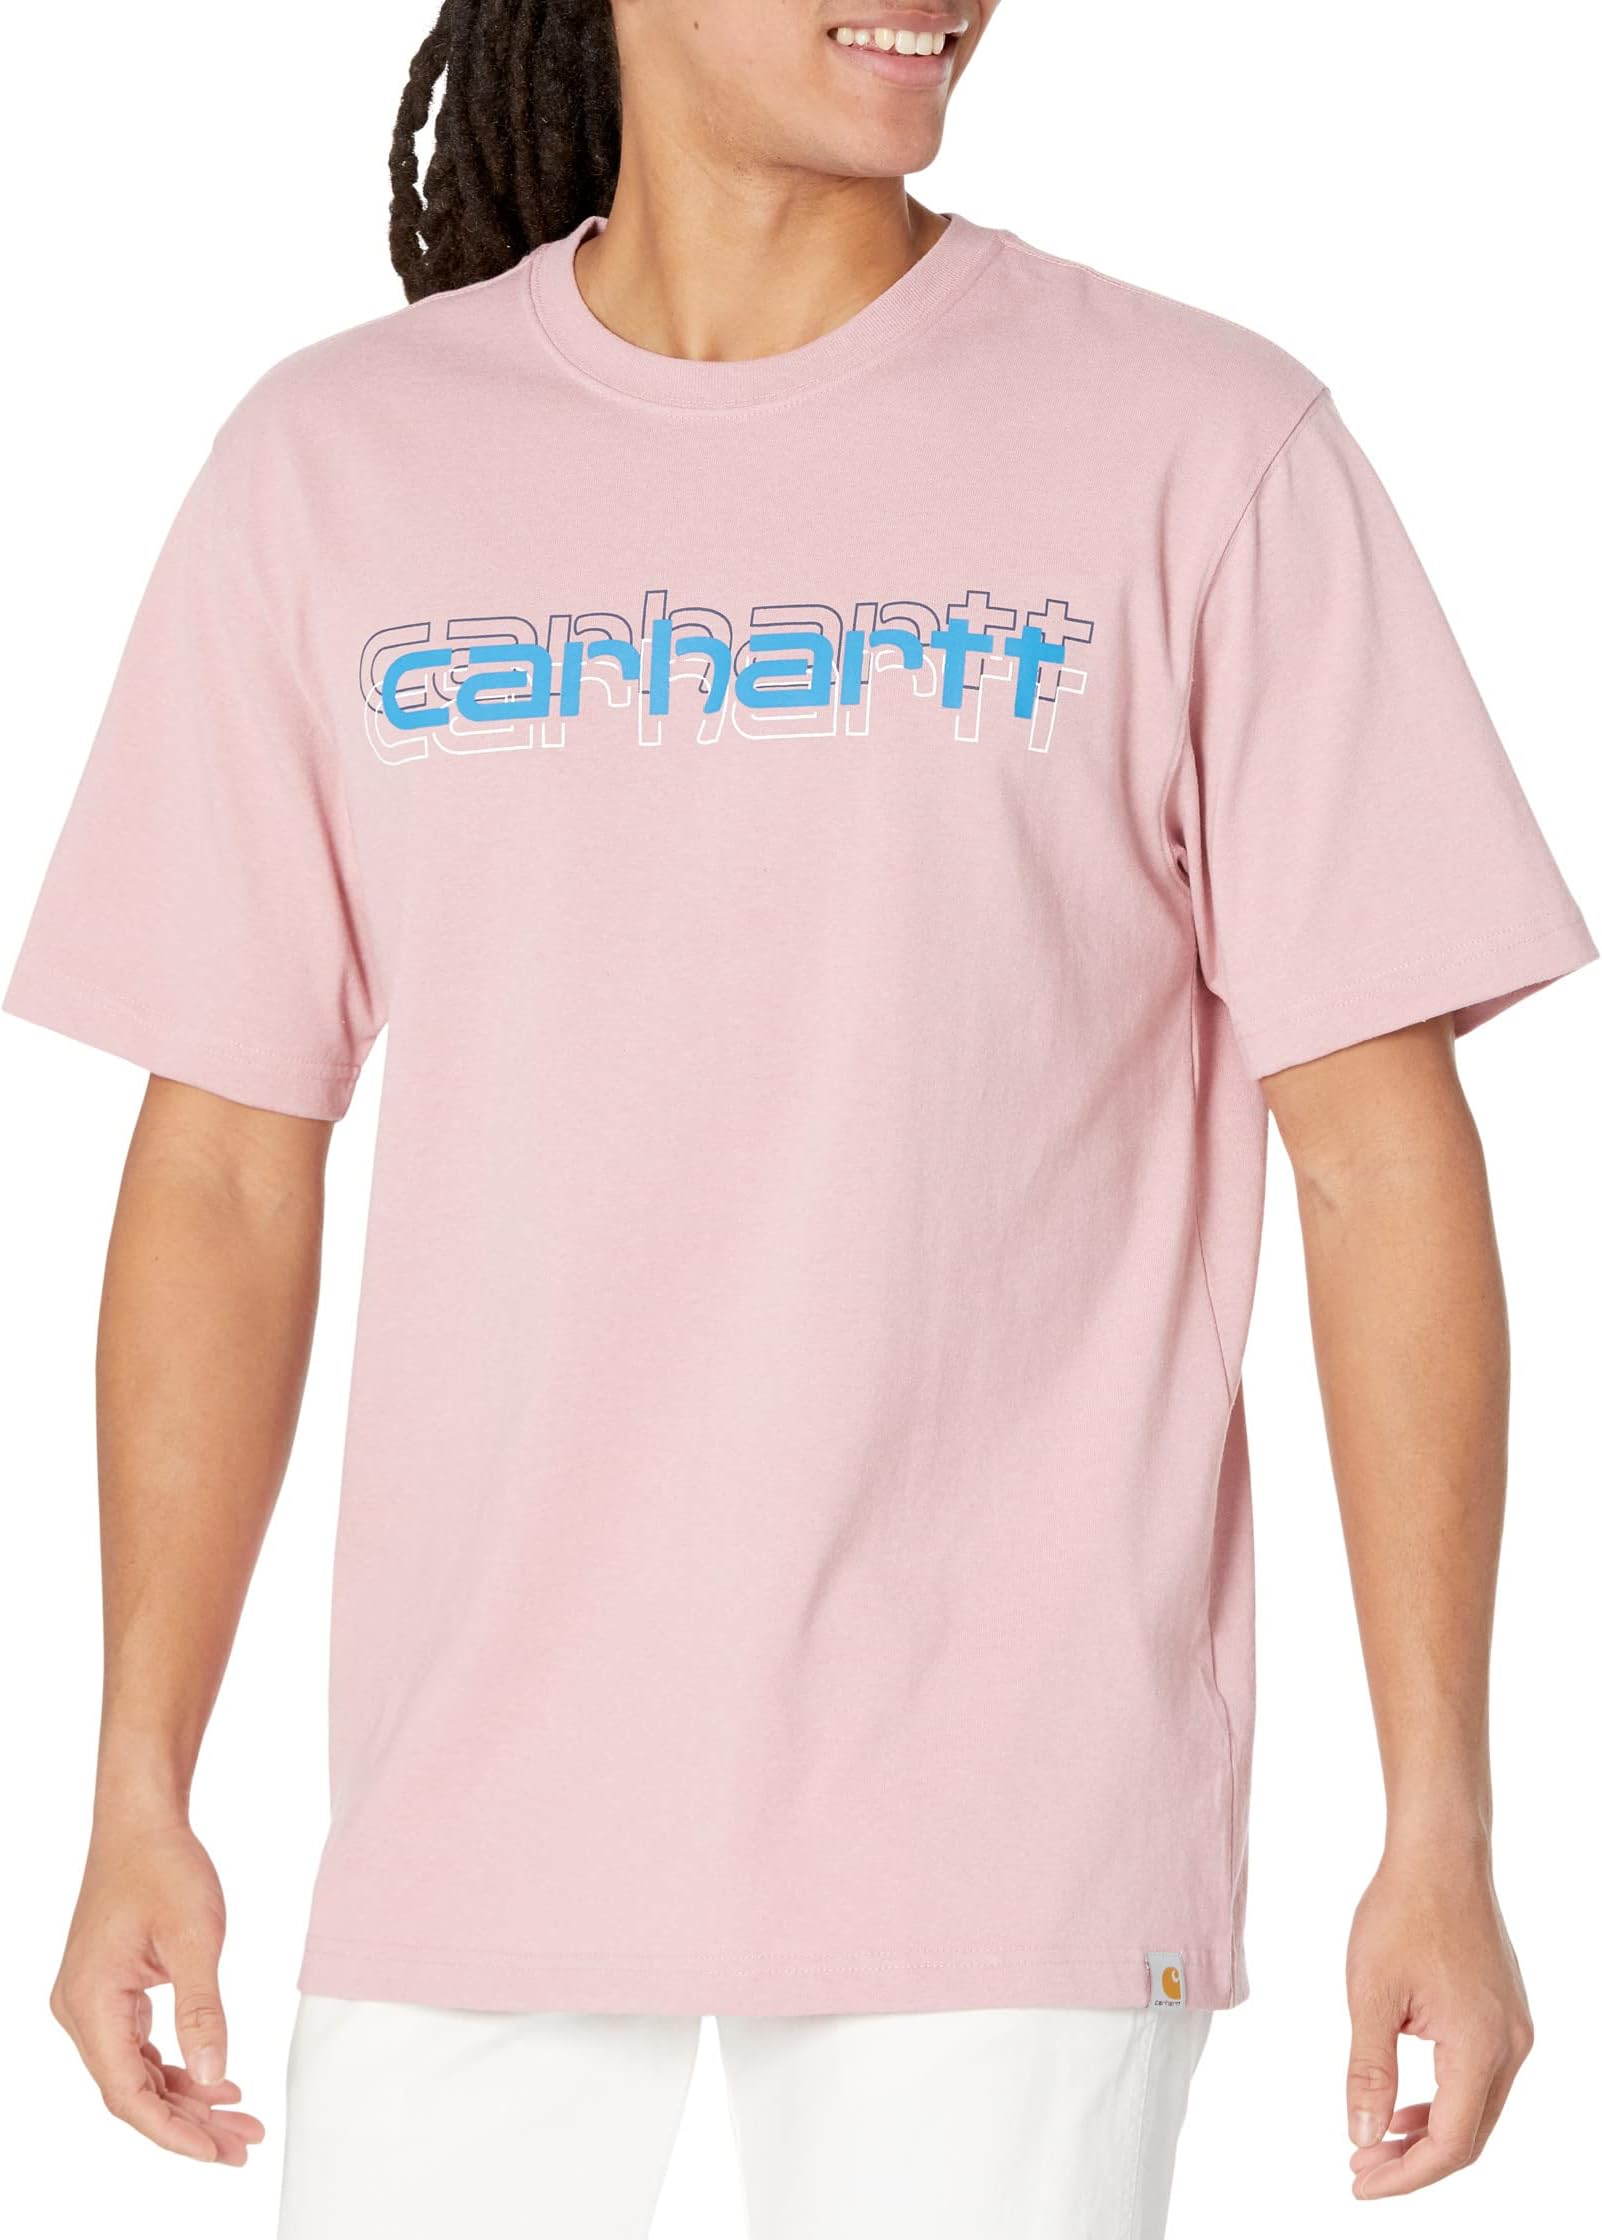 Свободная футболка тяжелого кроя с короткими рукавами и графическим логотипом Carhartt, цвет Foxglove Heather barlow christie foxglove farm